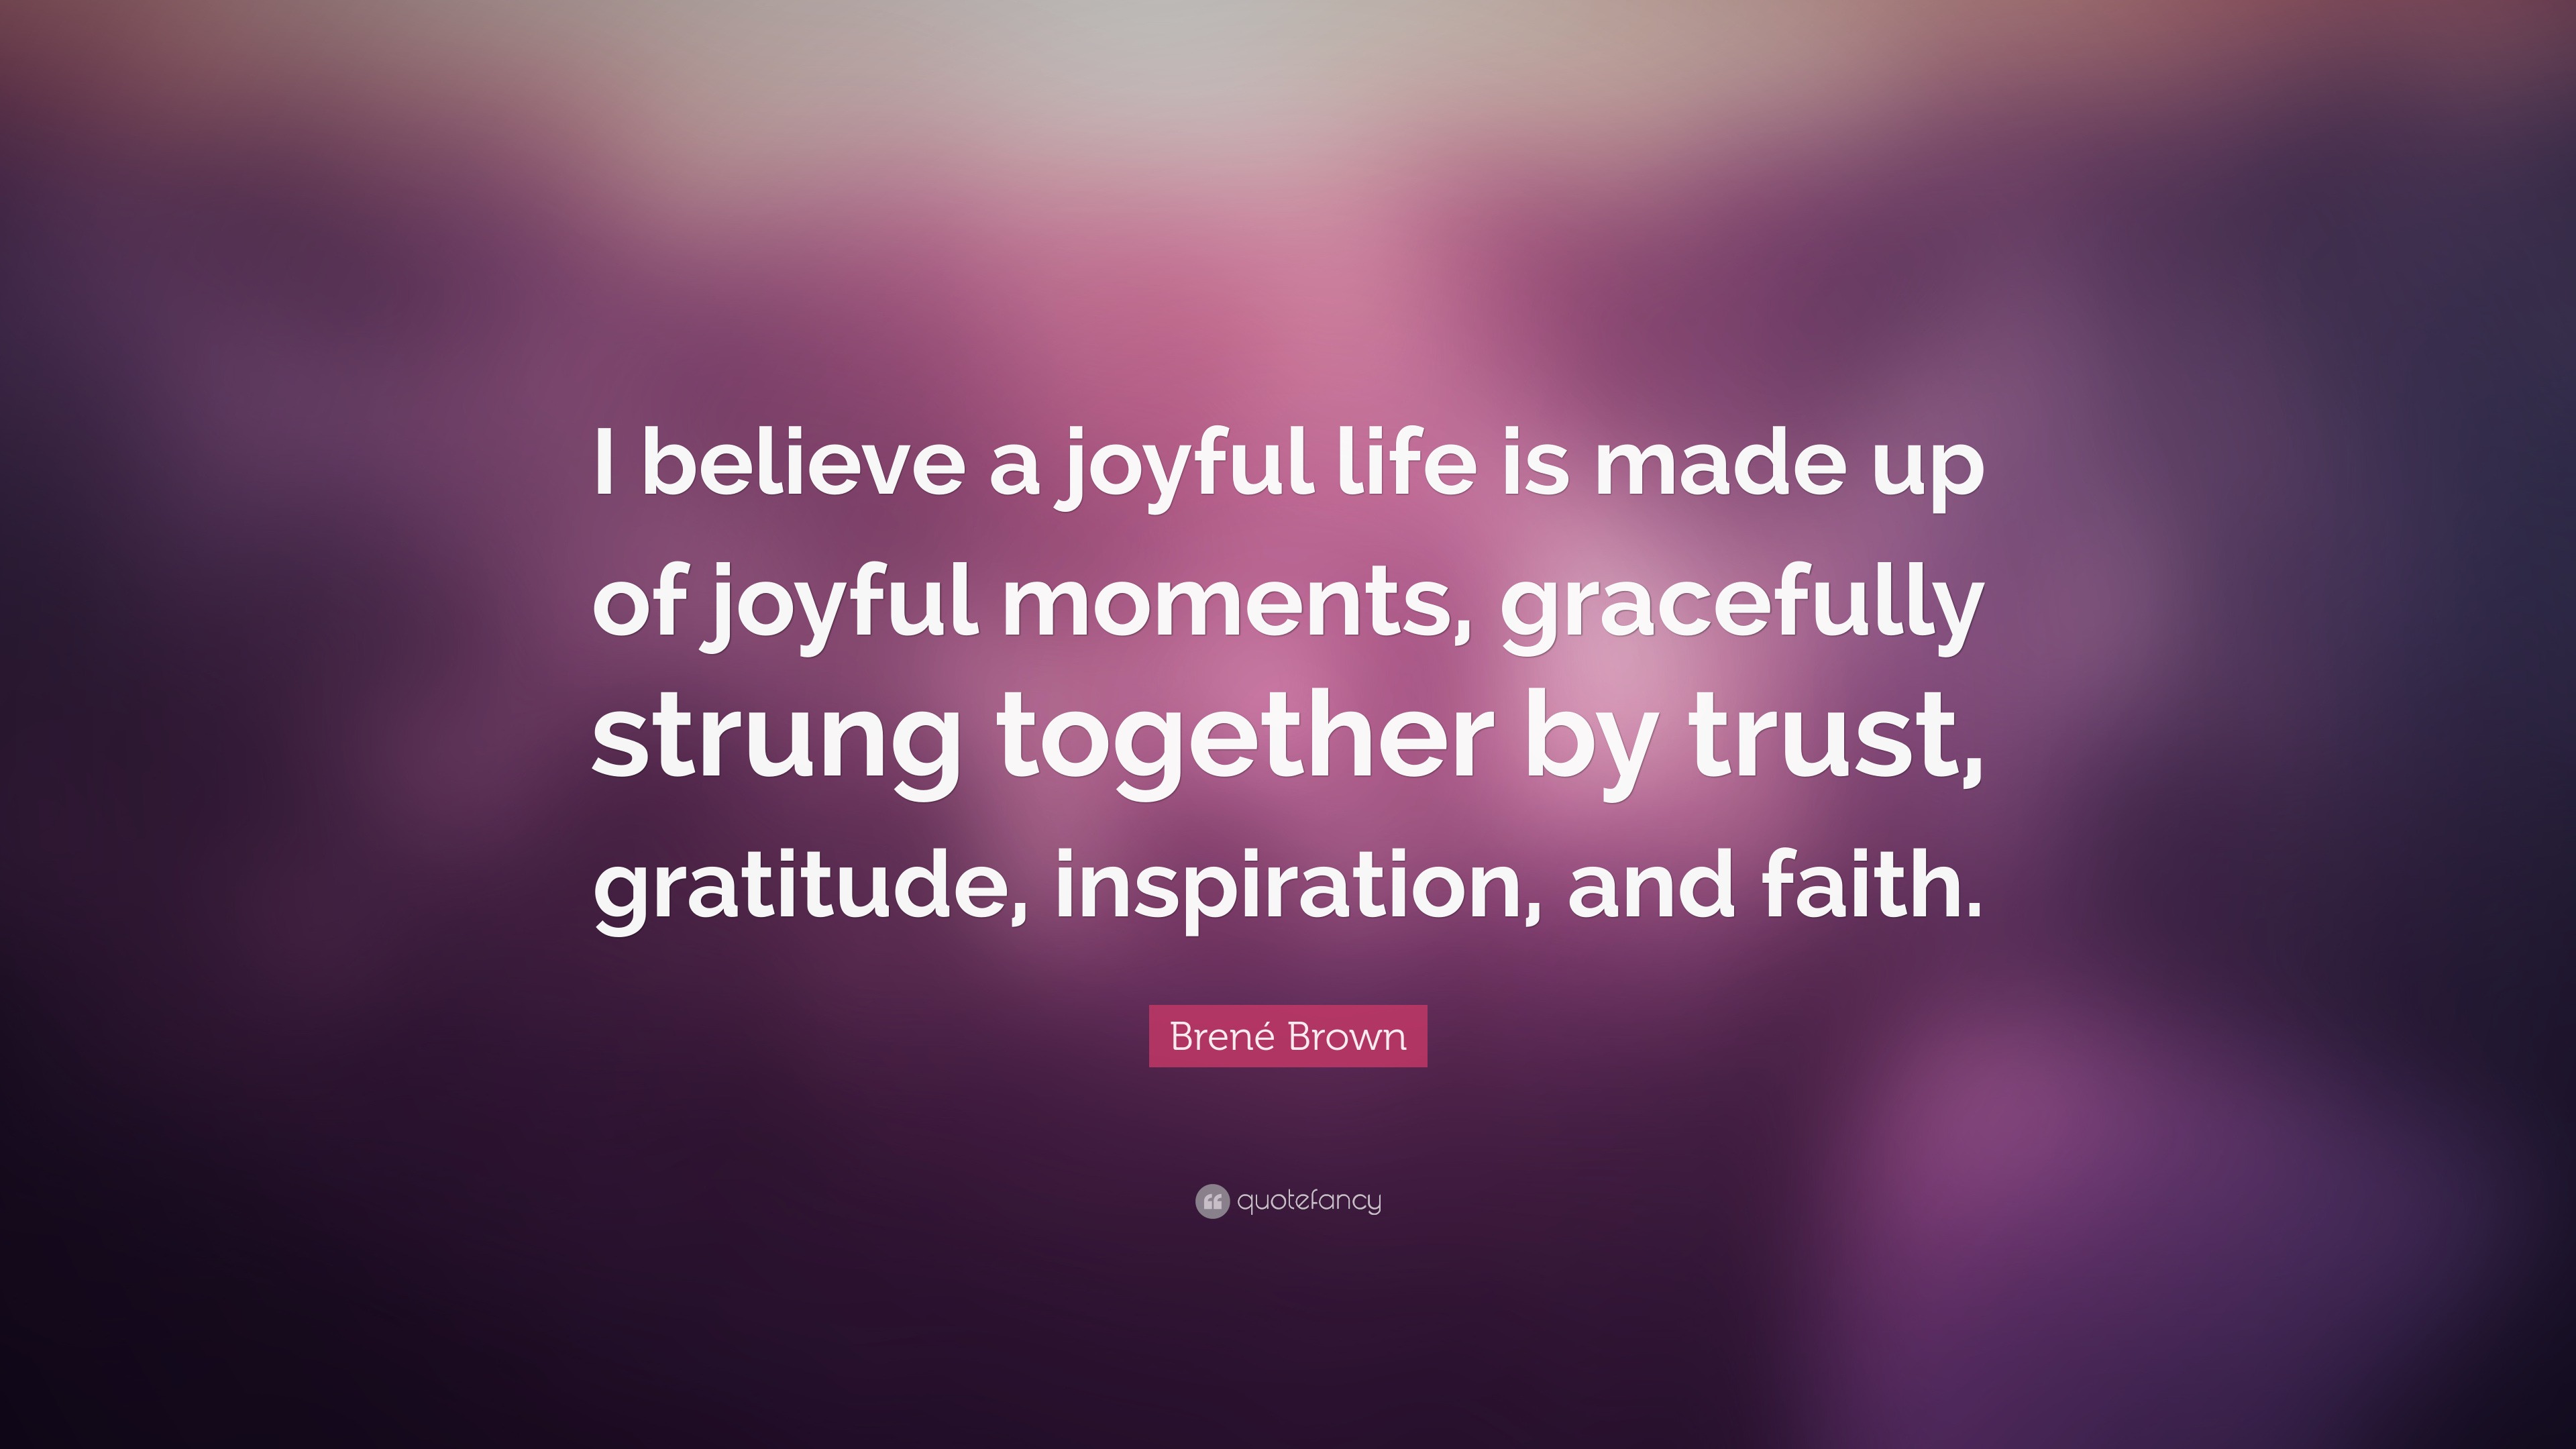 Brené Brown Quote: “I believe a joyful life is made up of joyful